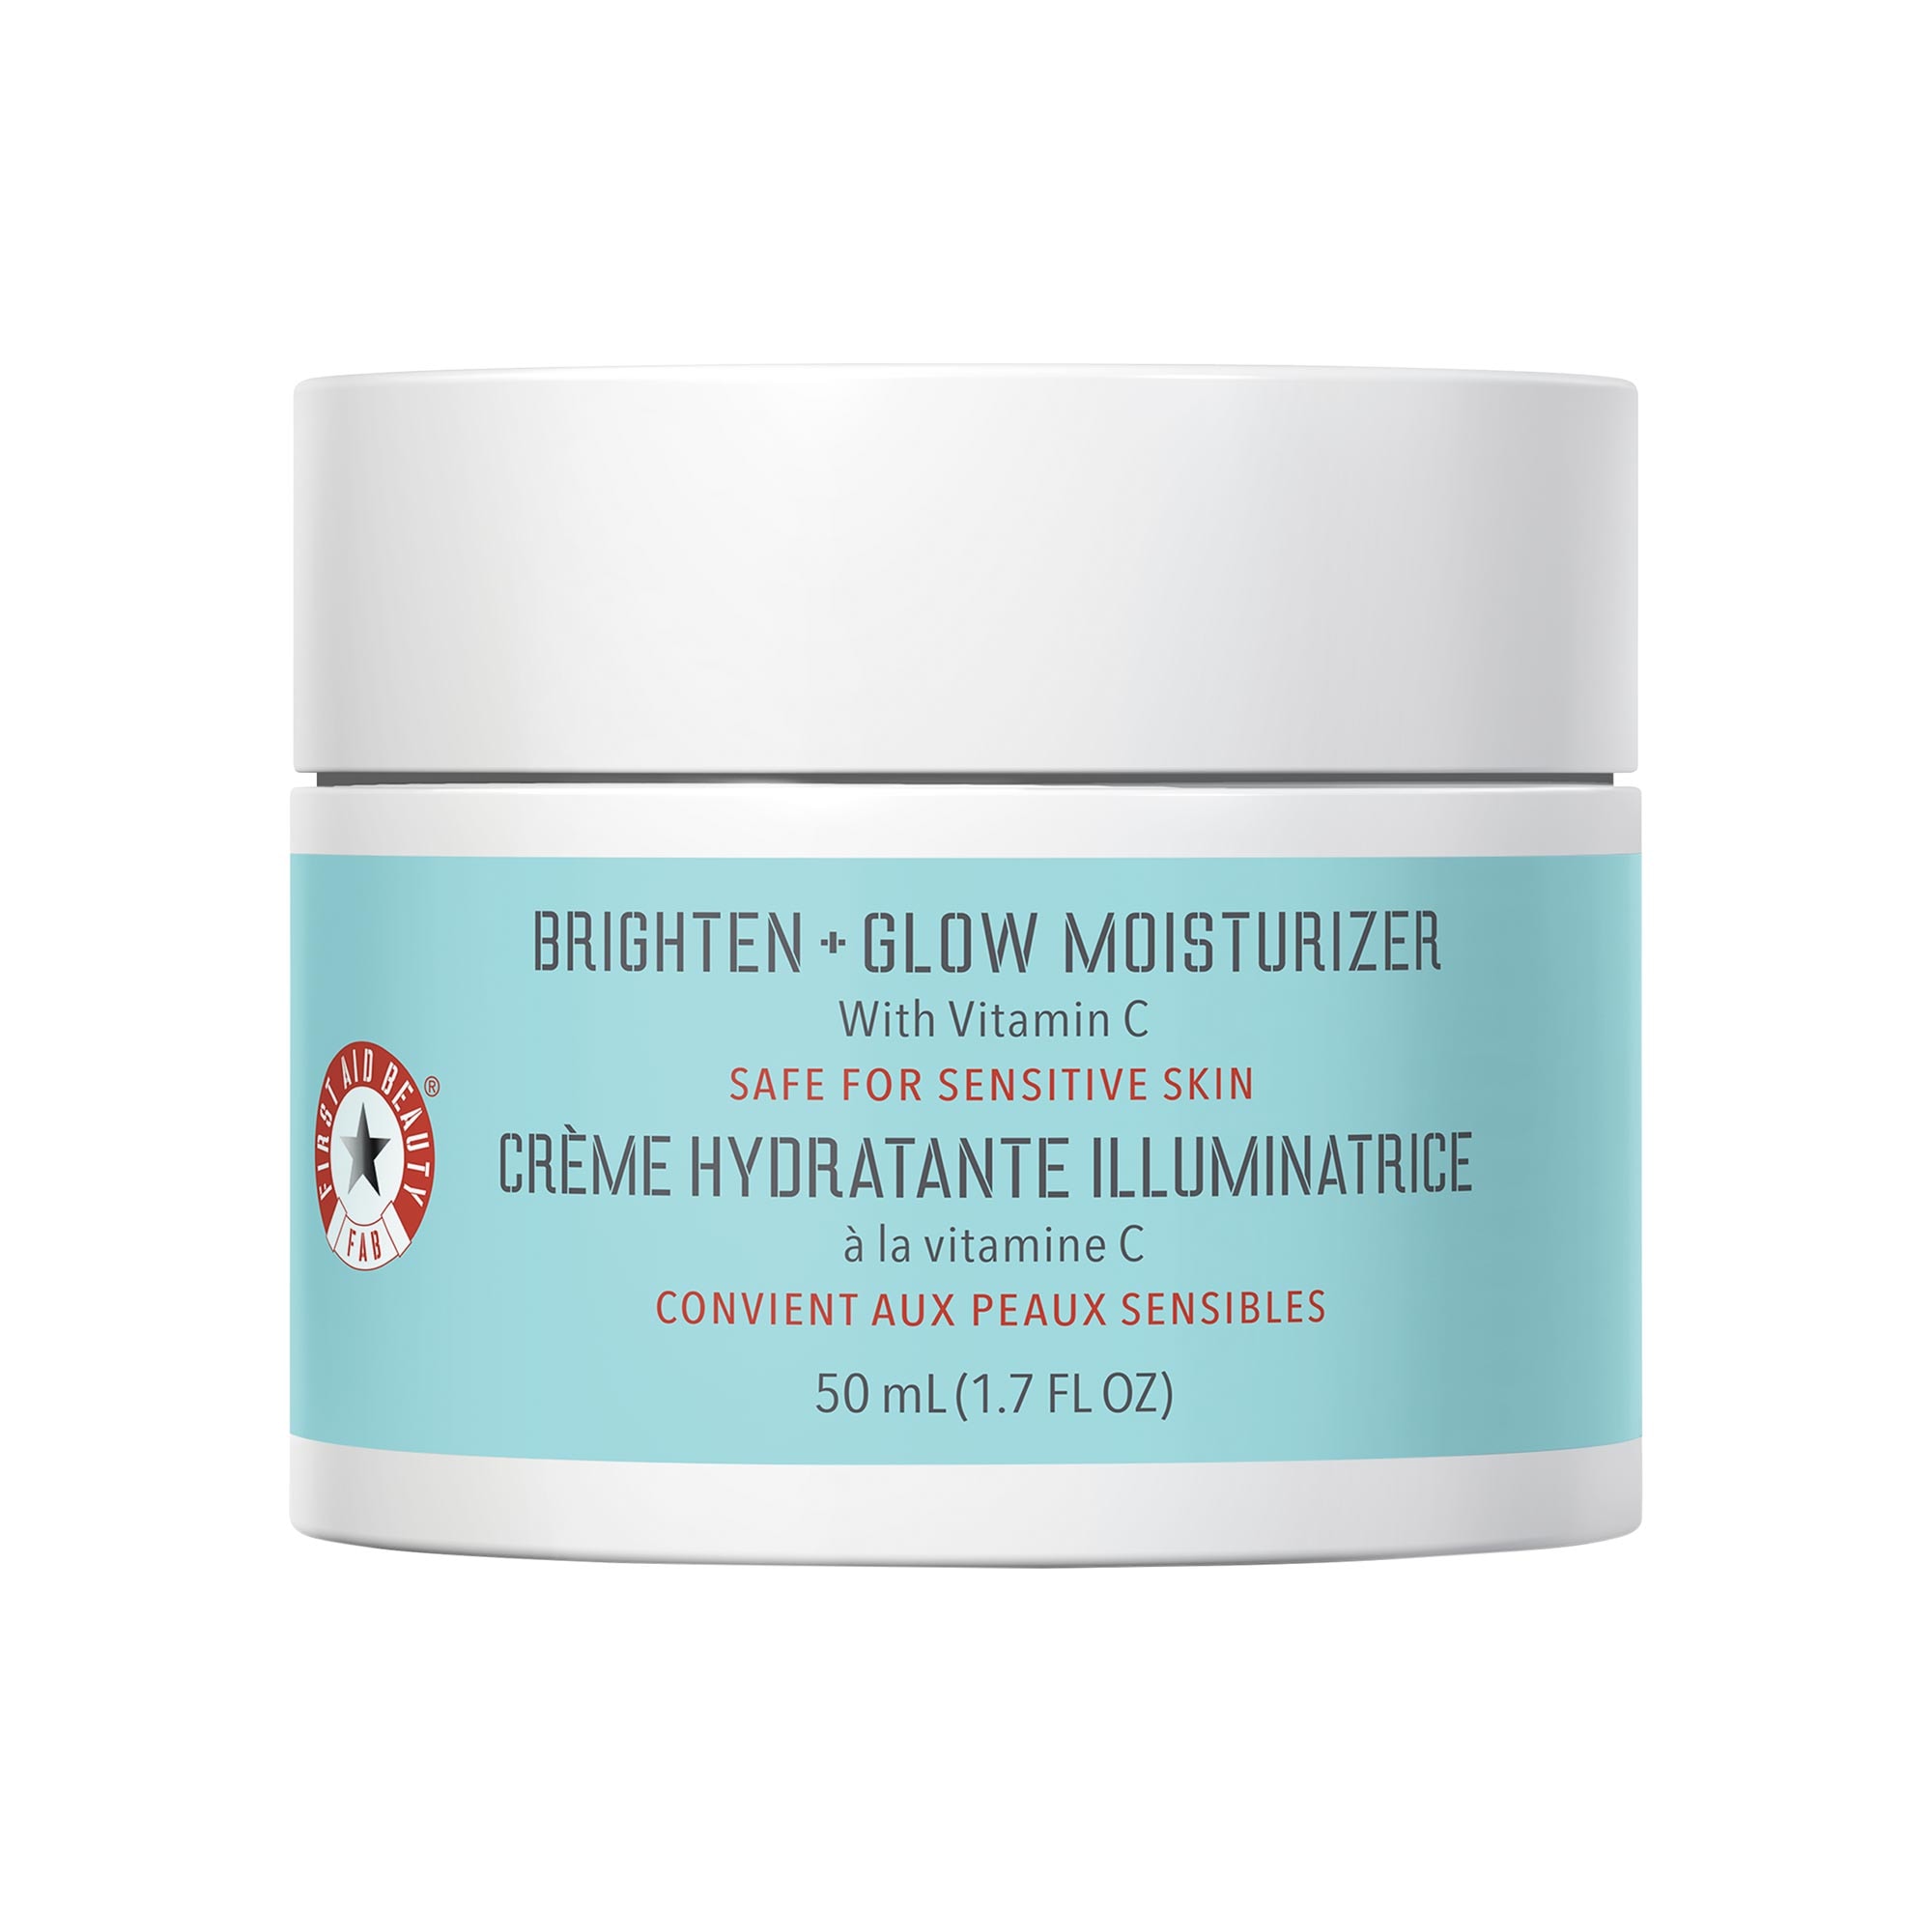 Brighten + Glow Moisturizer with Vitamin C First Aid Beauty